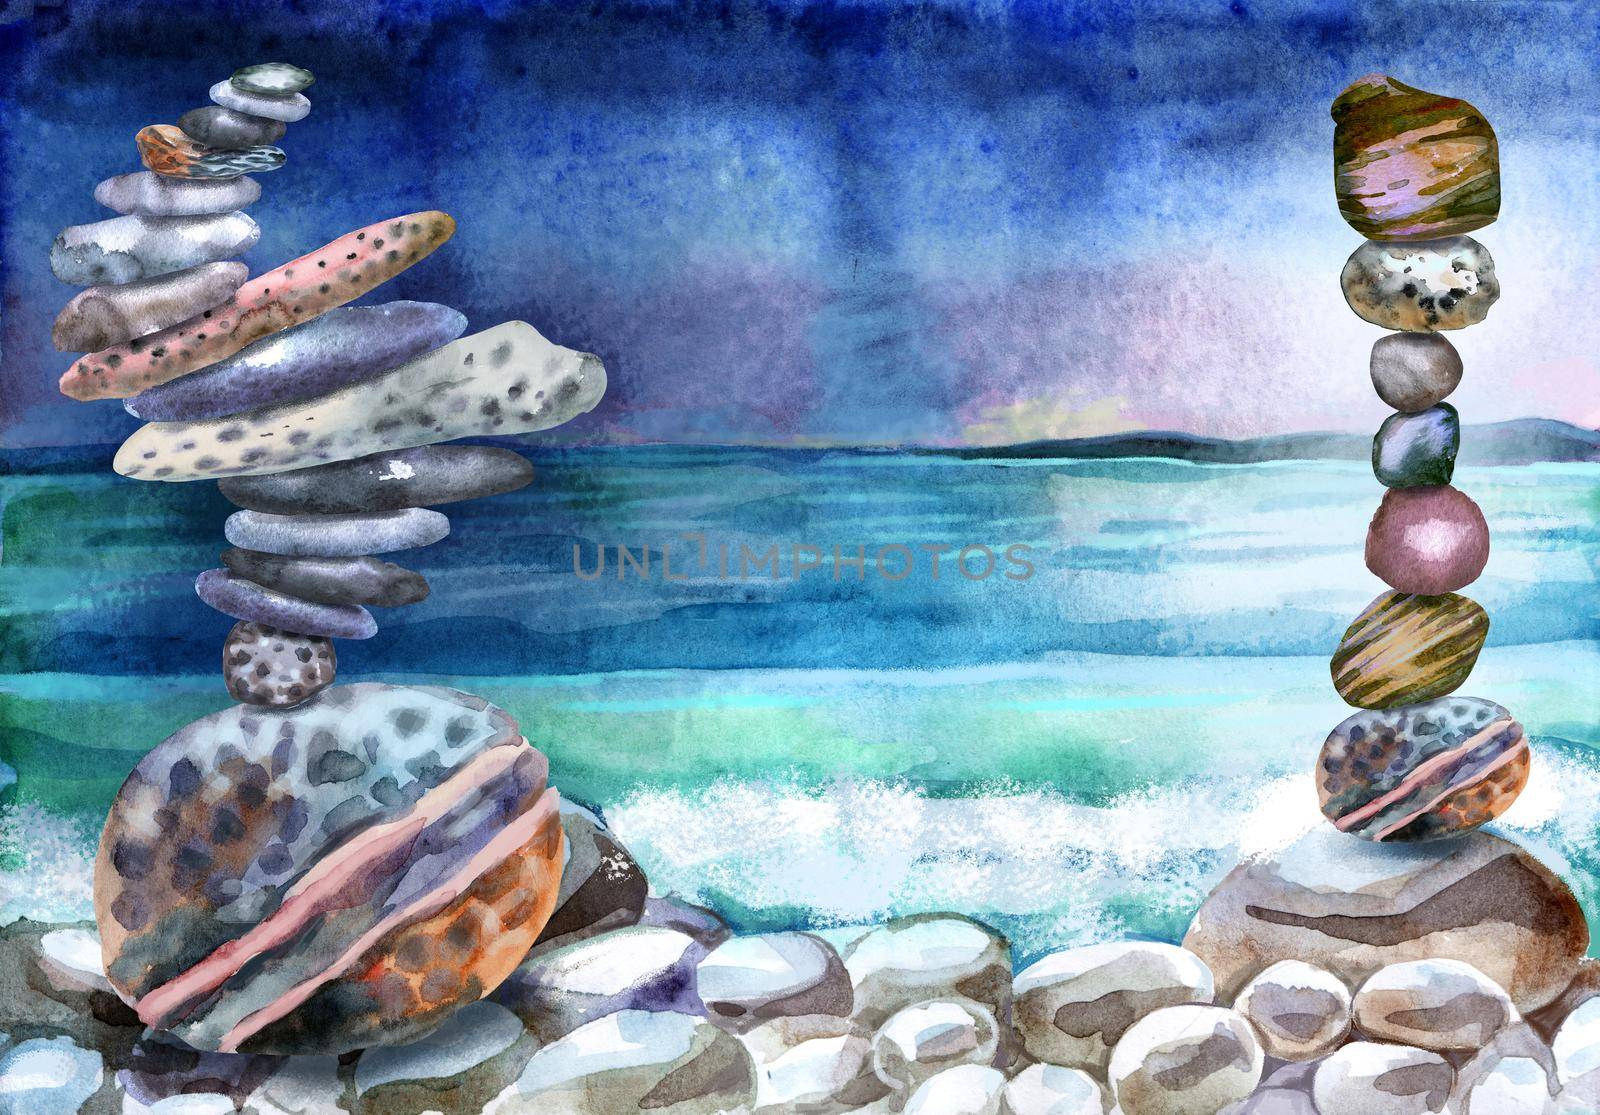 Watercolor seascape stacks of flat pebbles for wallpaper design. Colorful wallpaper. Background illustration.